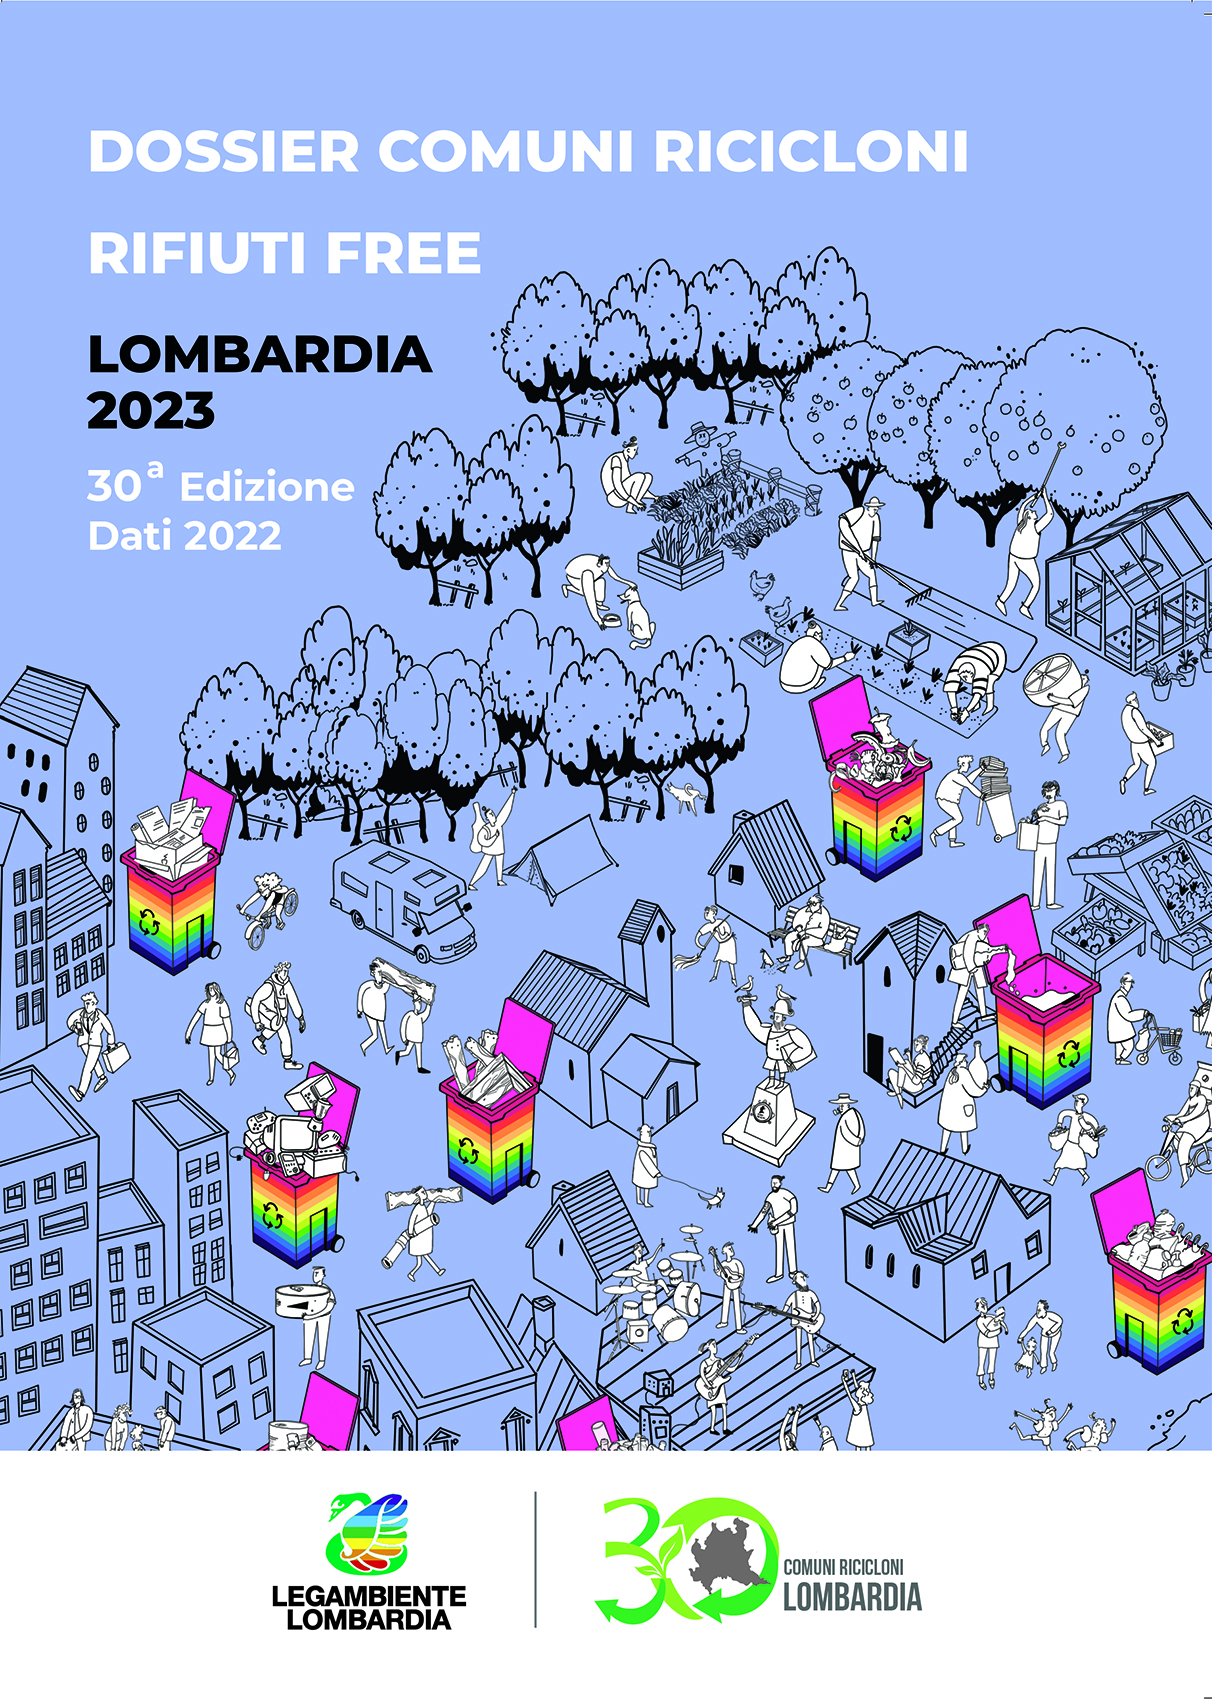 Dossier_Lombardia-1705401147.jpg